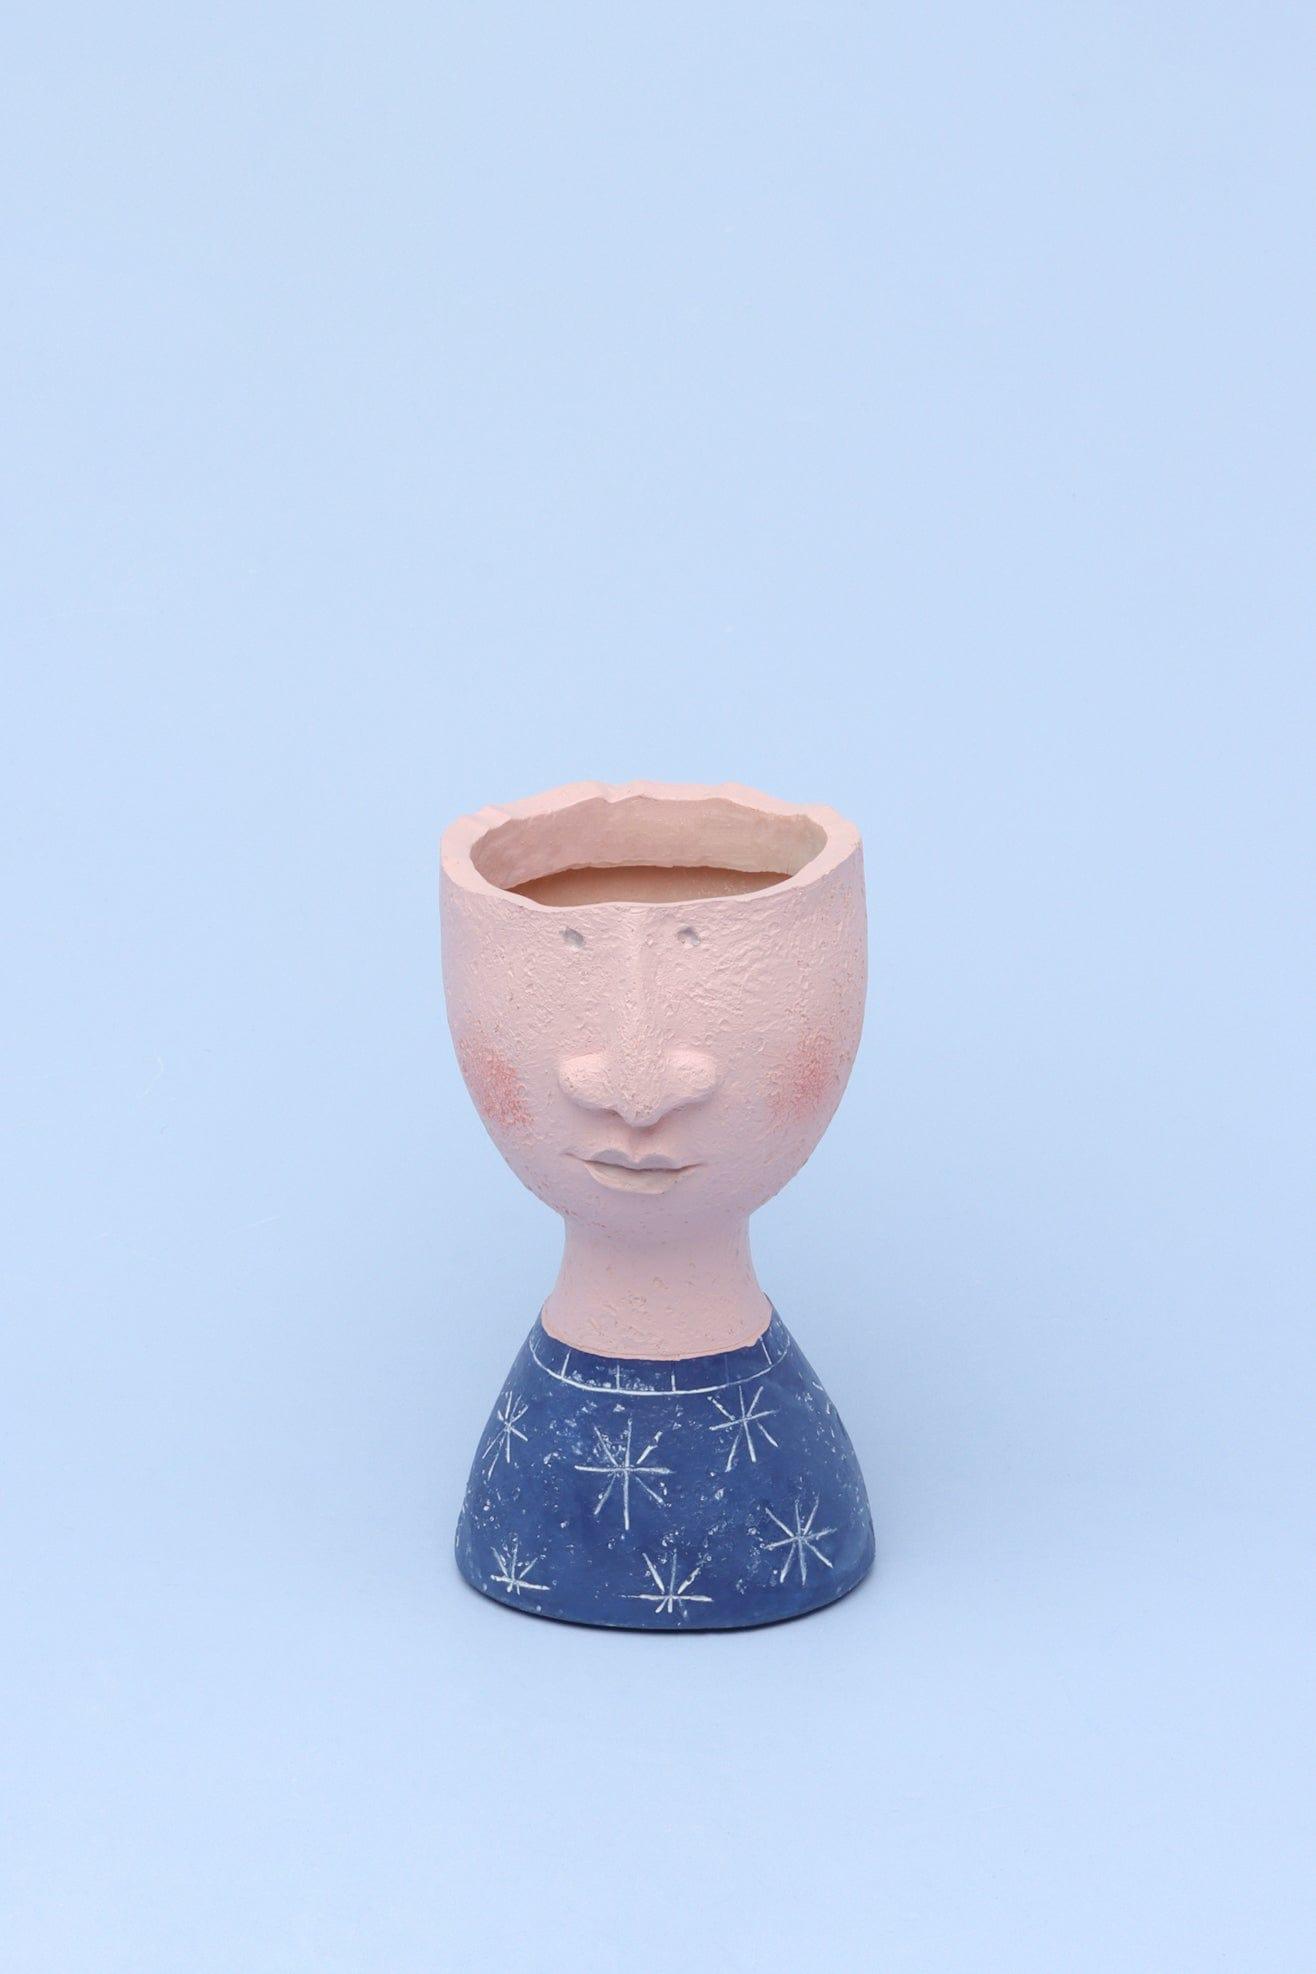 G Decor Vases Blue Resin Characteristic Human Family Faces Flower Plant Pot Planter Or Home Decoration Vase